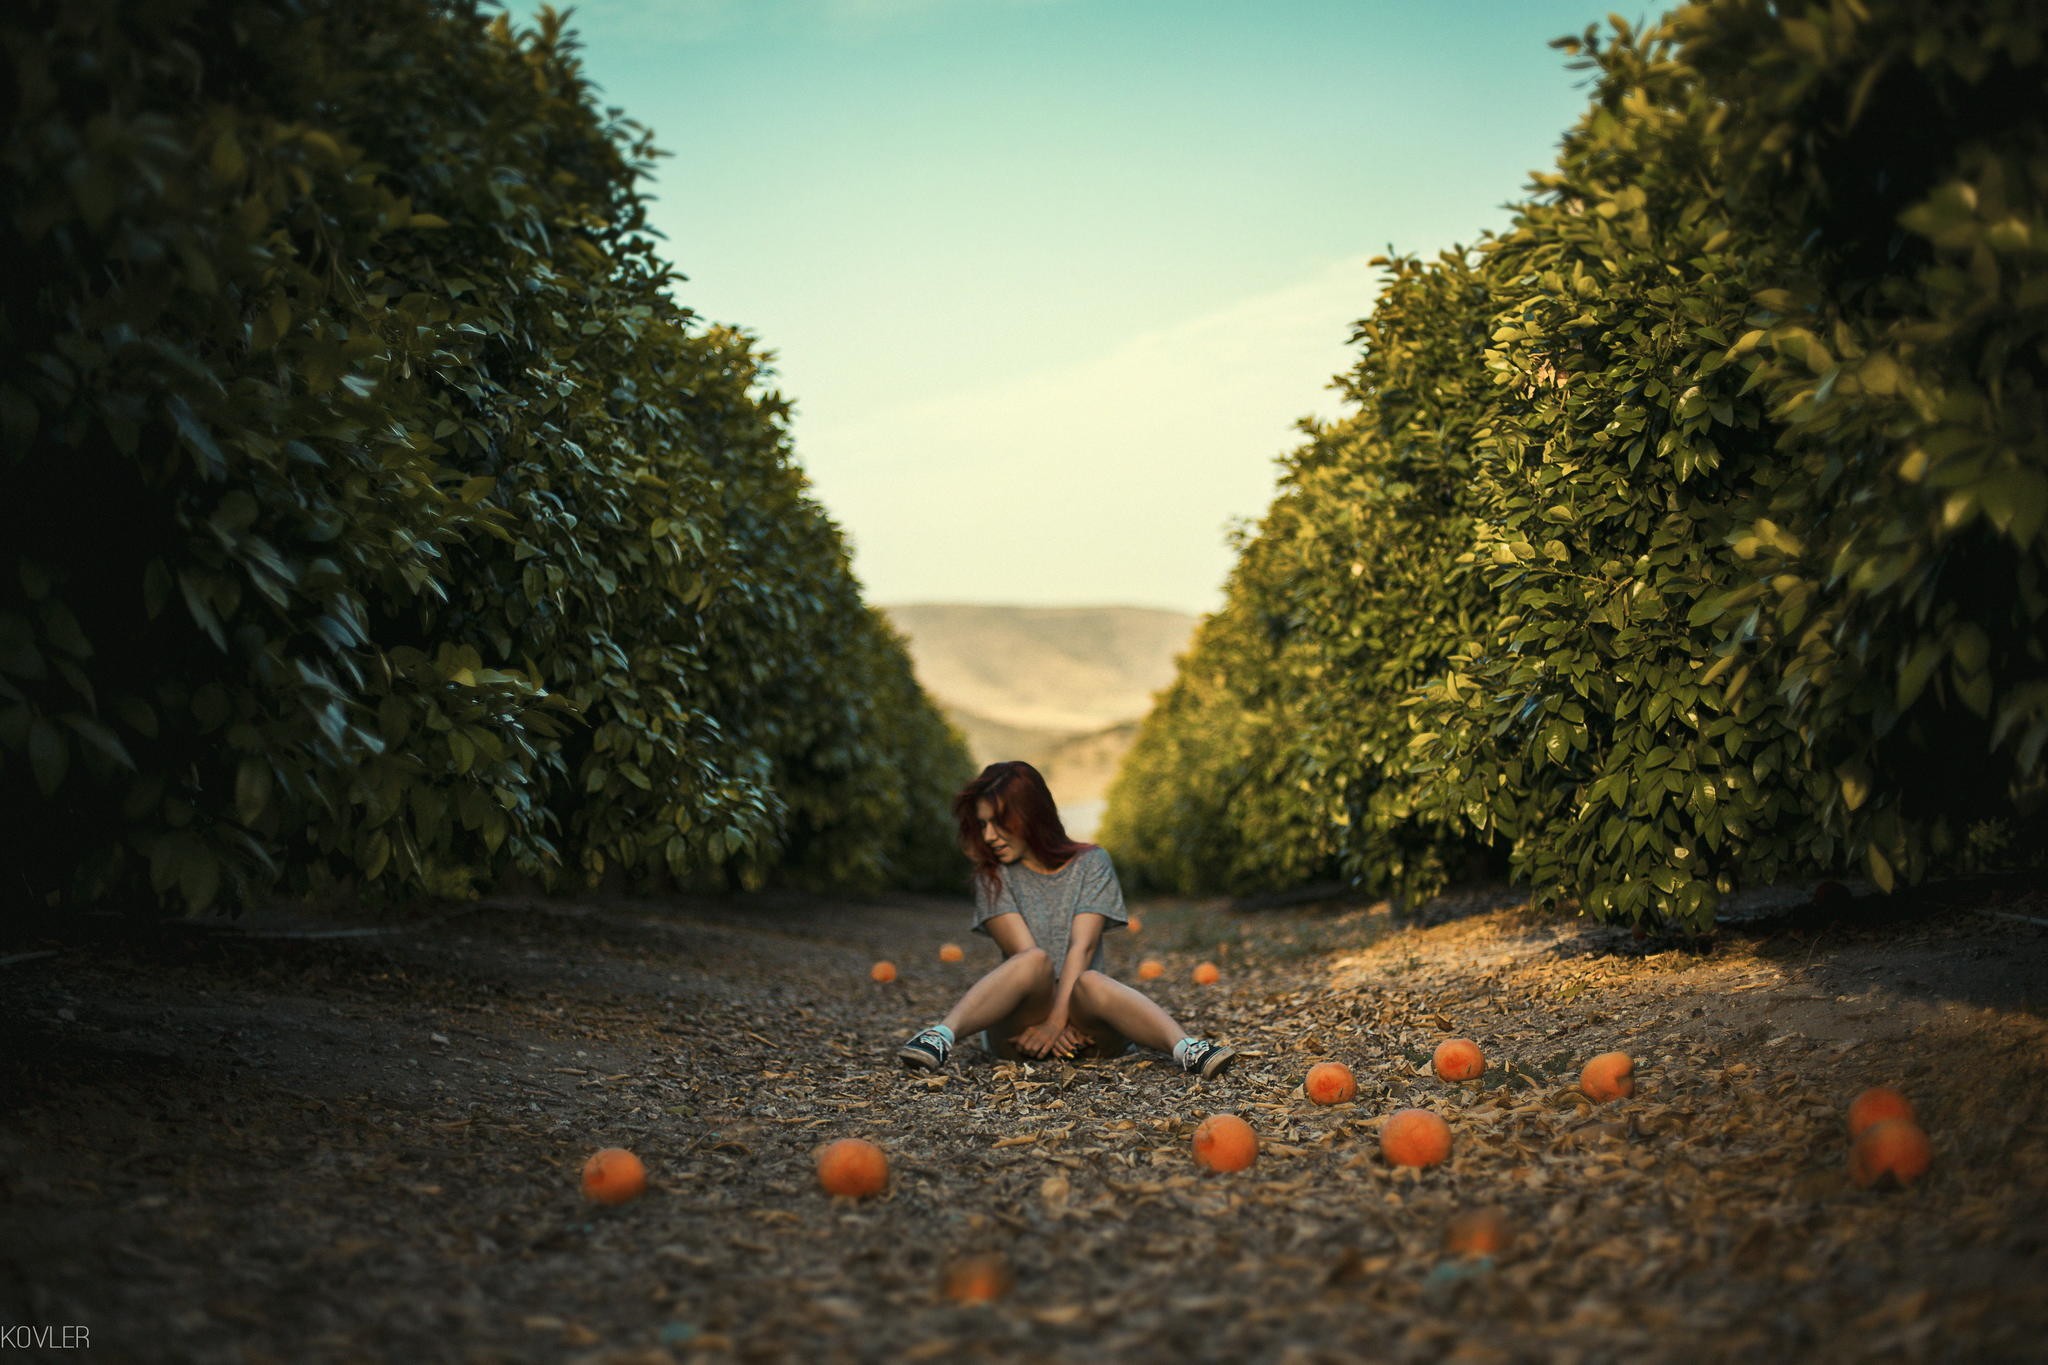 Women Redhead Sitting Path Mangos Orange Fruit Dan Kovler Clear Sky 2048x1365